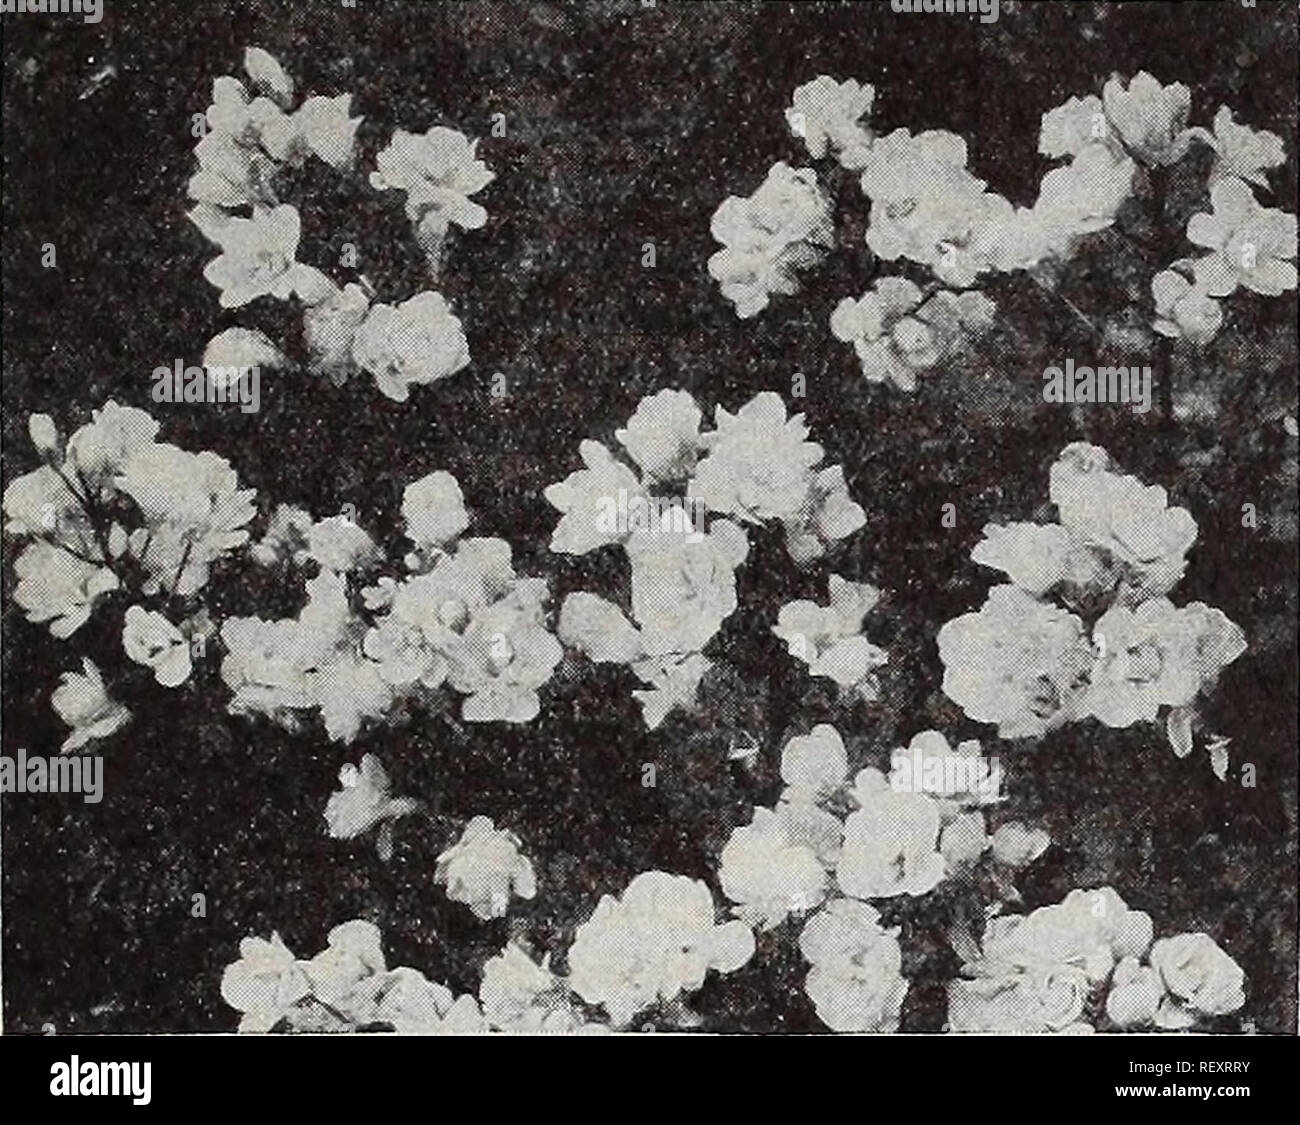 . Dreer's wholesale catalog for florists : winter spring summer 1937. Bulbs (Plants) Catalogs; Vegetables Seeds Catalogs; Flowers Seeds Catalogs; Nurseries (Horticulture) Catalogs; Gardening Equipment and supplies Catalogs. ^ HENRY A. DREER Hafdy Percniiial Plants wholesale list. Arabis alpina flore plena Arabis—Rock Cress Per doz. Per 100 Alpina. Single white; 3-inch pots $1 50 $10 00 — fl. pi. 3-inch pots 2 50 15 00 — rosea. 3-inch pots 2 50 15 00 Arenaria—Sandwort Montana. 3-inch pots 1 50 10 00 Verna caespitosa. 3-incli pots 1 50 10 00 Armaria—Thrift, Sea Pink Cephalotes, Bees Ruby. Has st Stock Photo